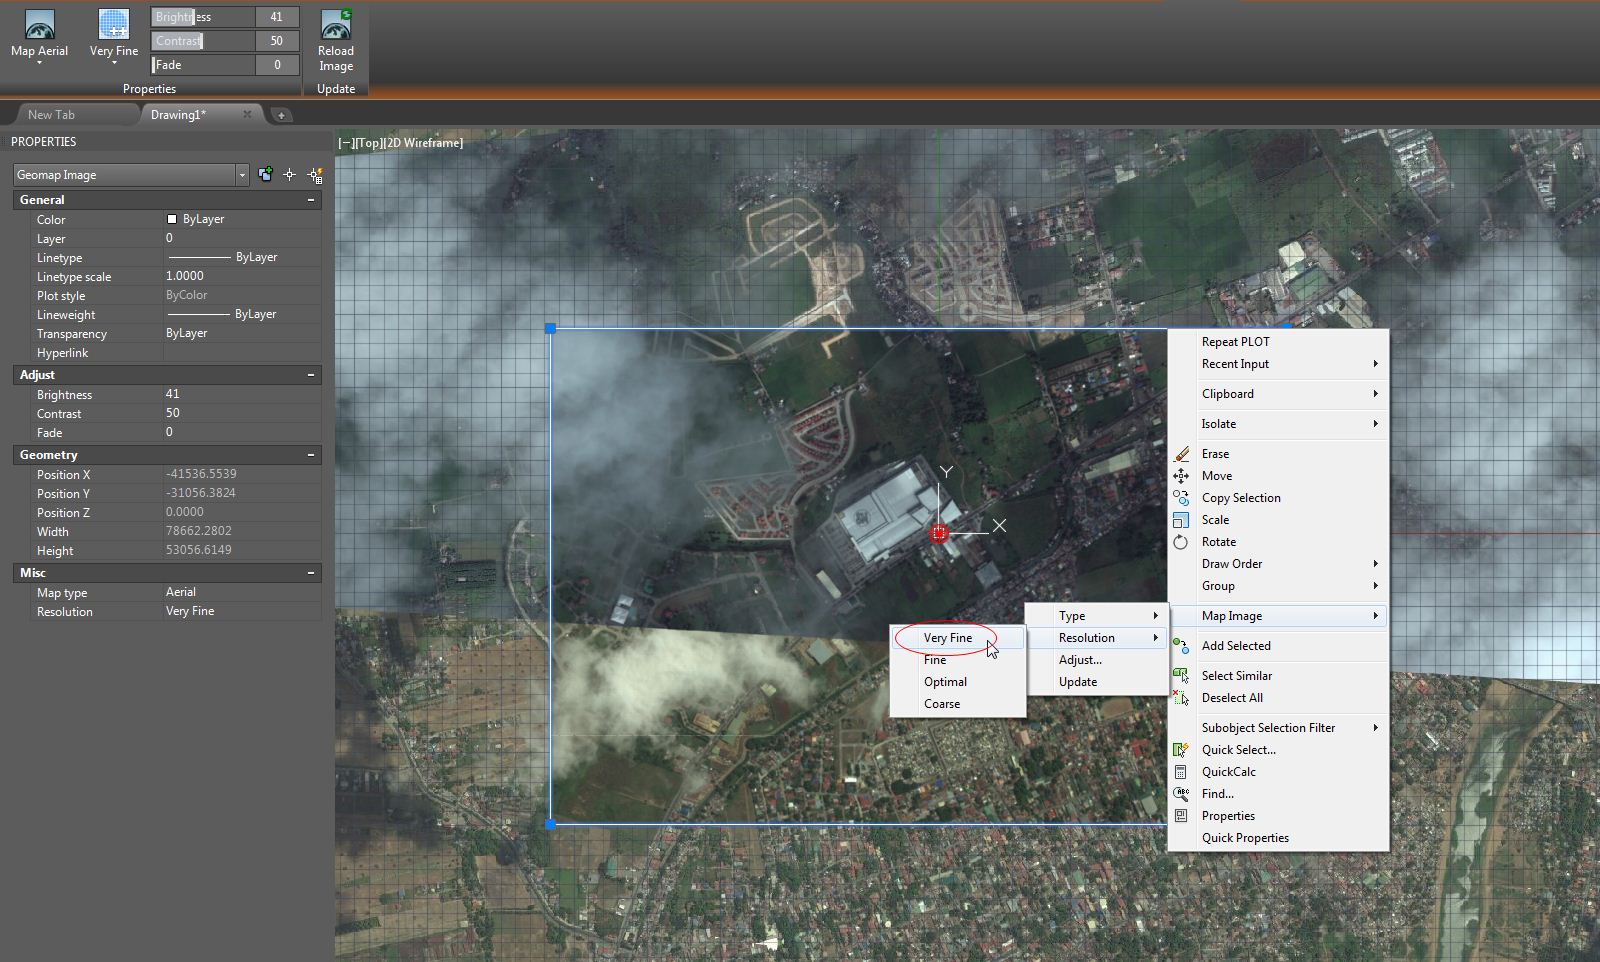 PS_Autodesk-AutoCAD2015_Geolocation-map-settings.jpg